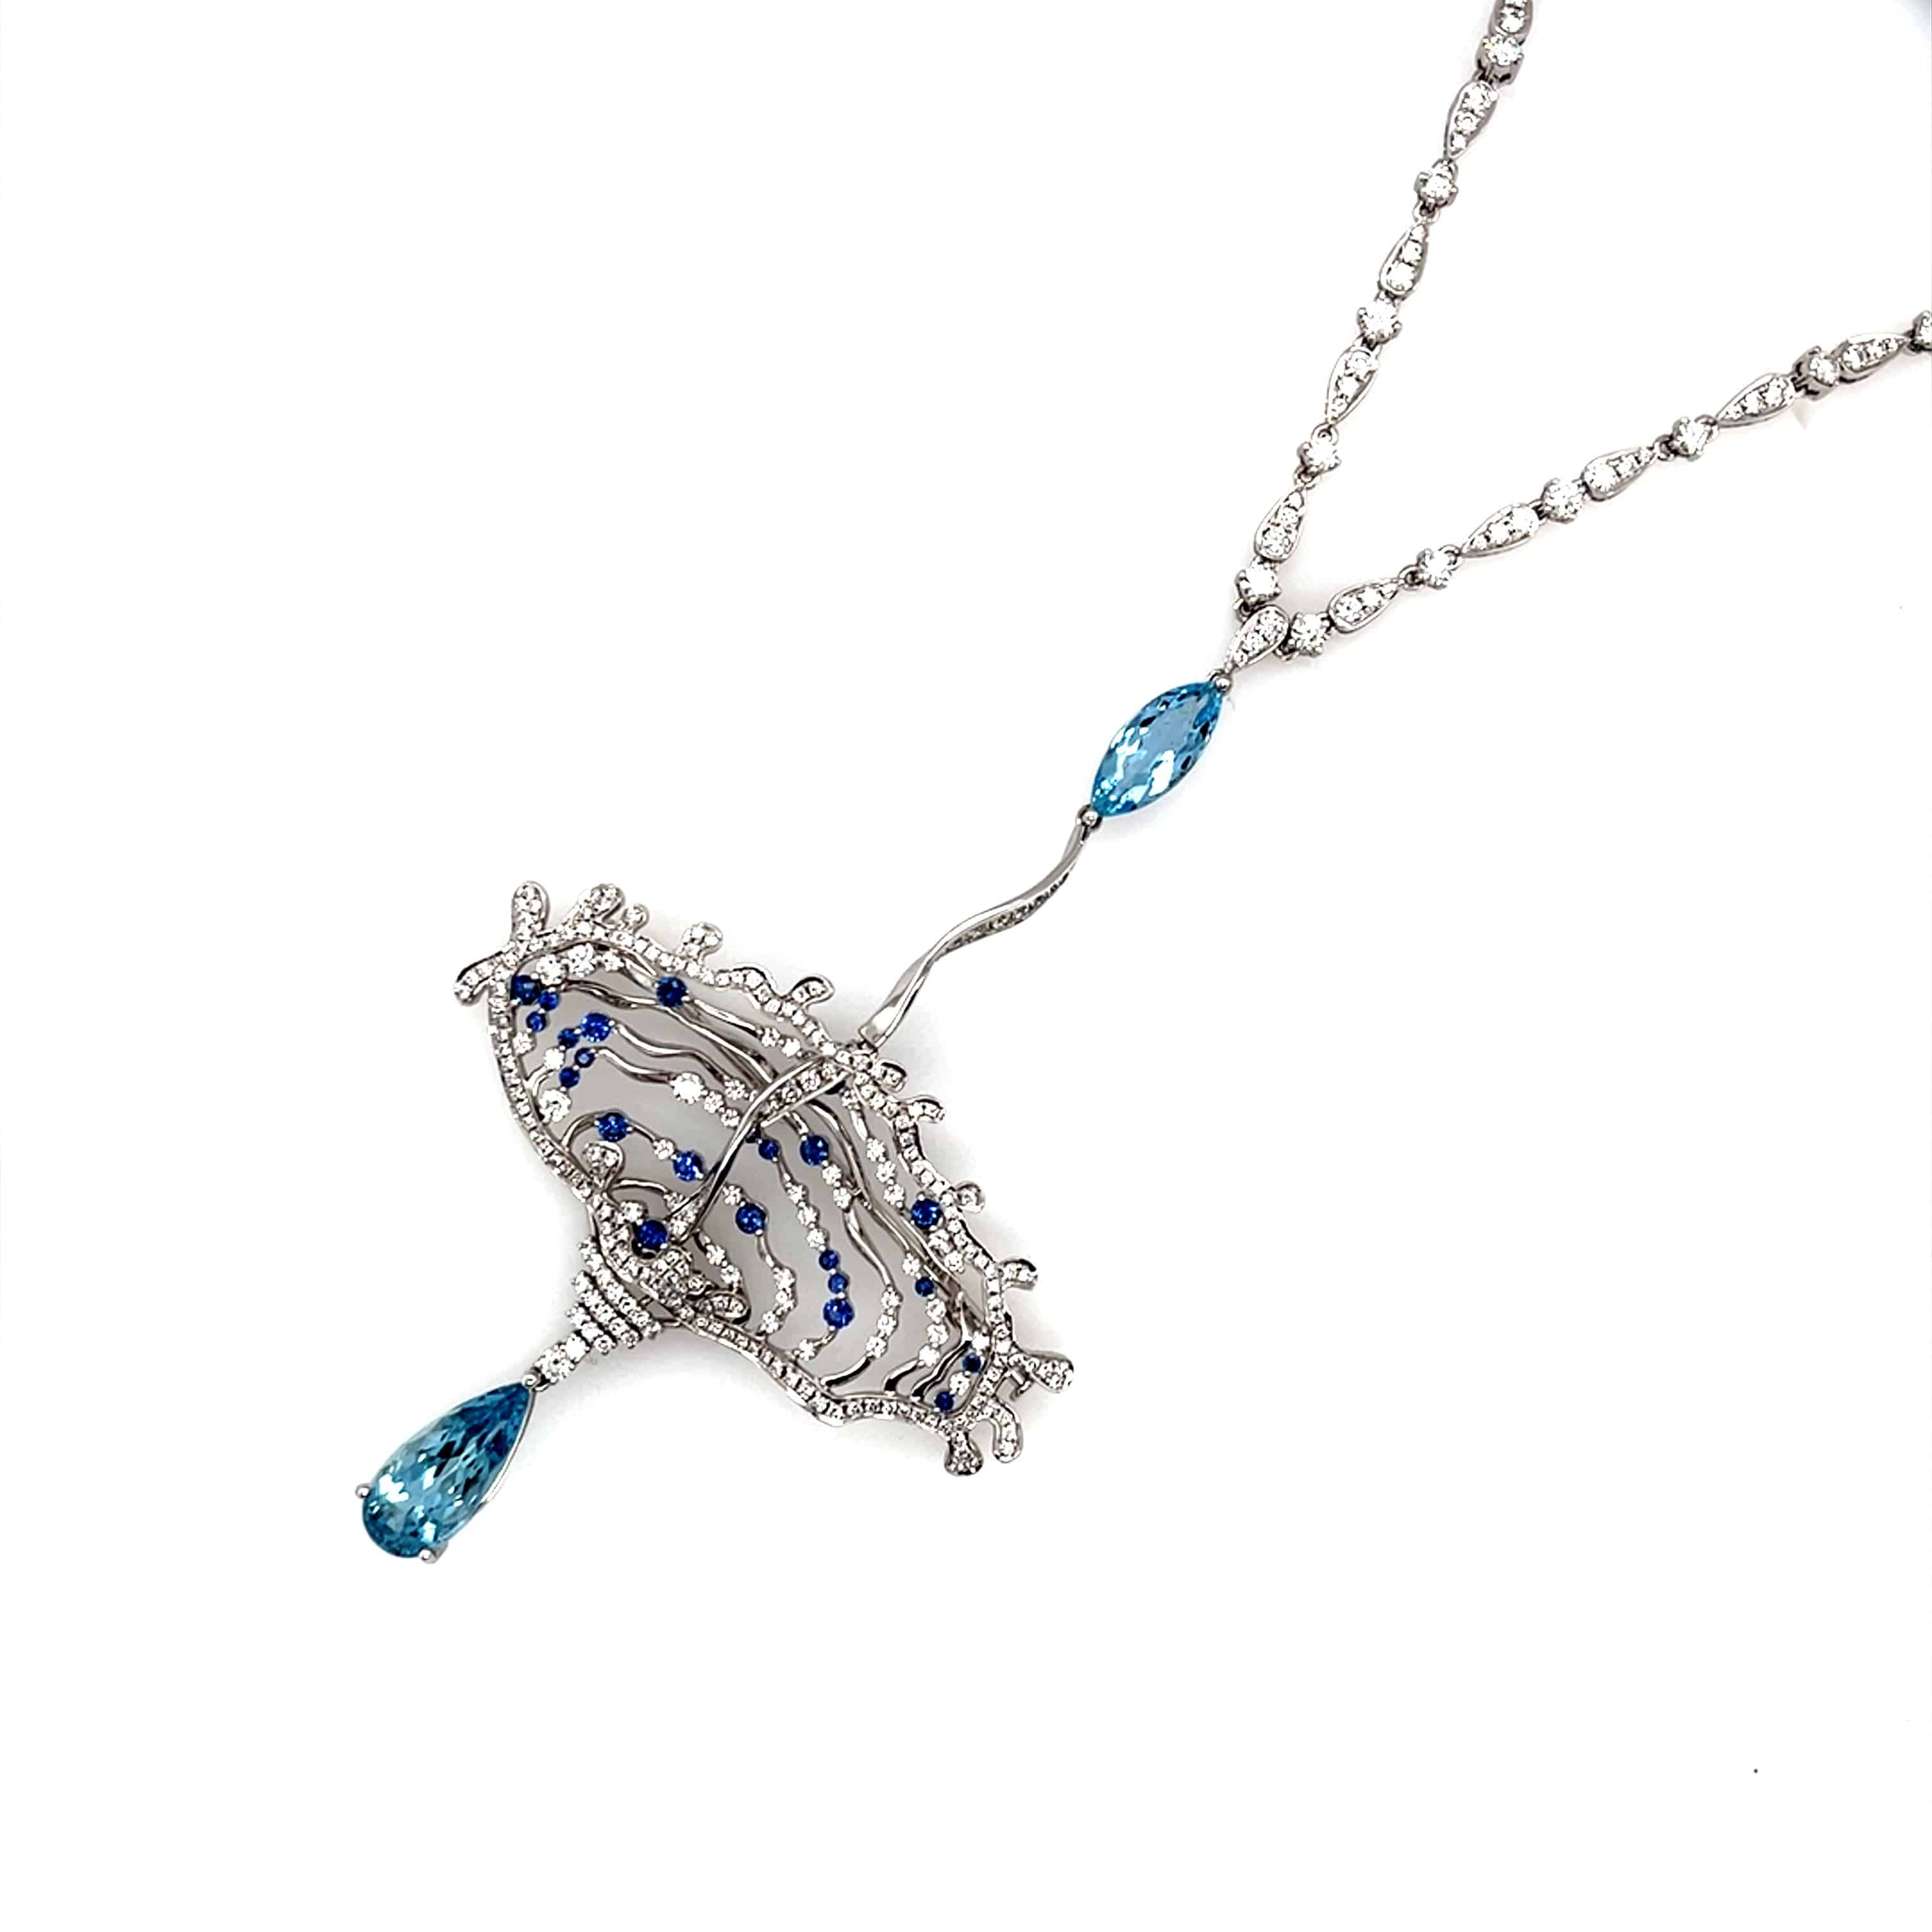 transformational-aquarmarine-sapphire-diamond-necklace-brooch-rno1106-35240852062372.jpg